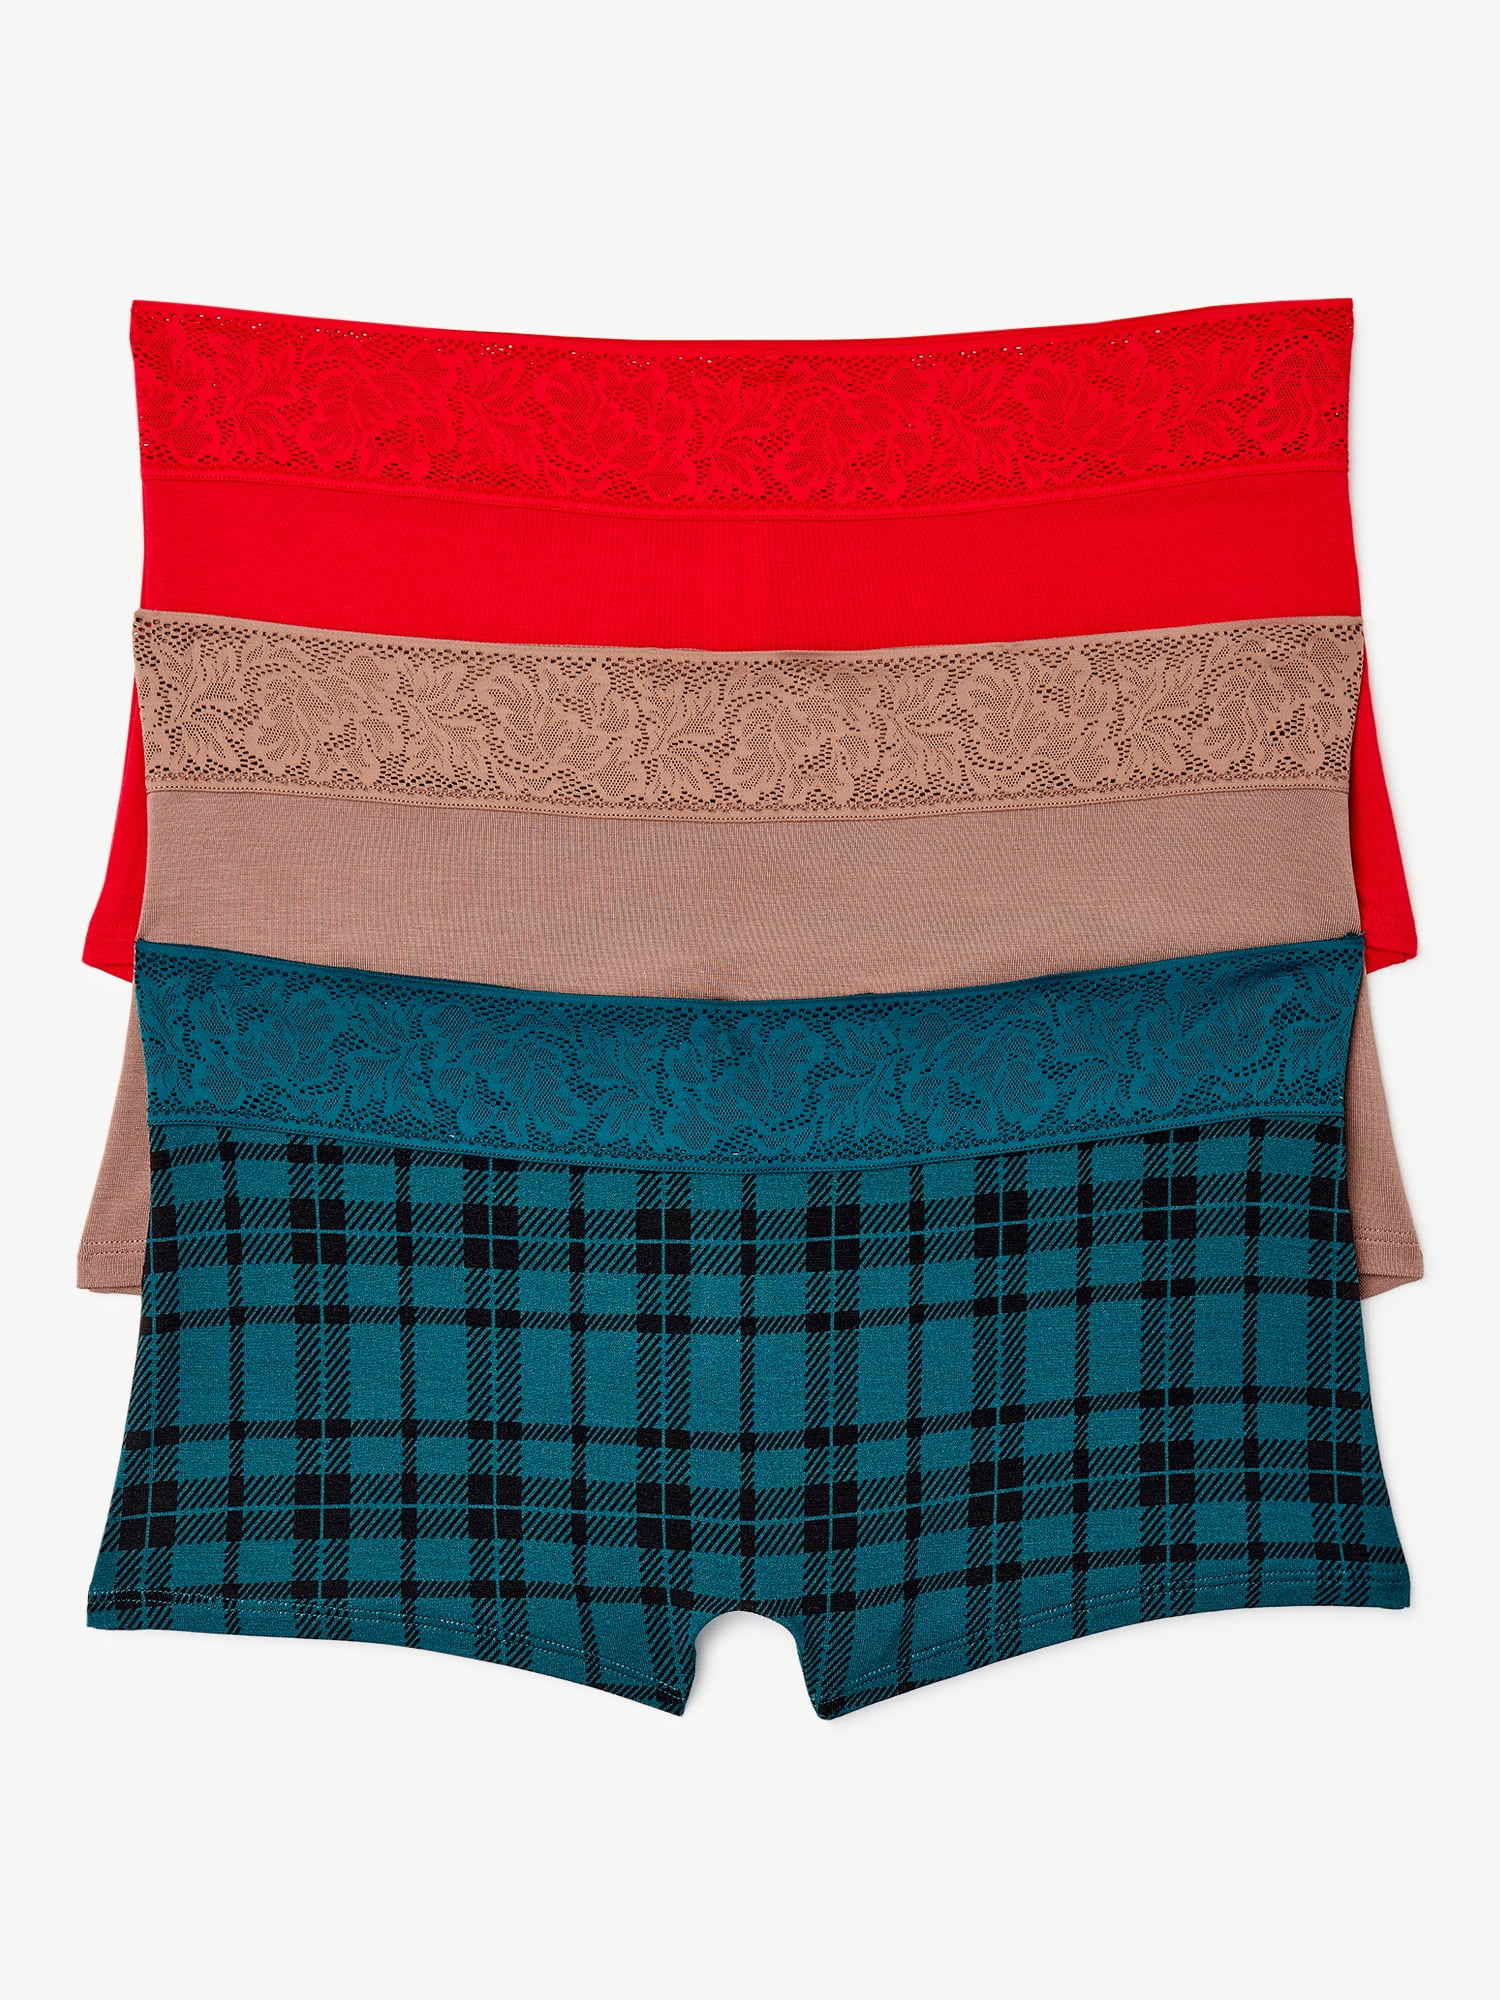 Boyshort Lace Shortie 3/6/12 Brief Boxer Lace Undies Panties Underwear 2101  S-4X